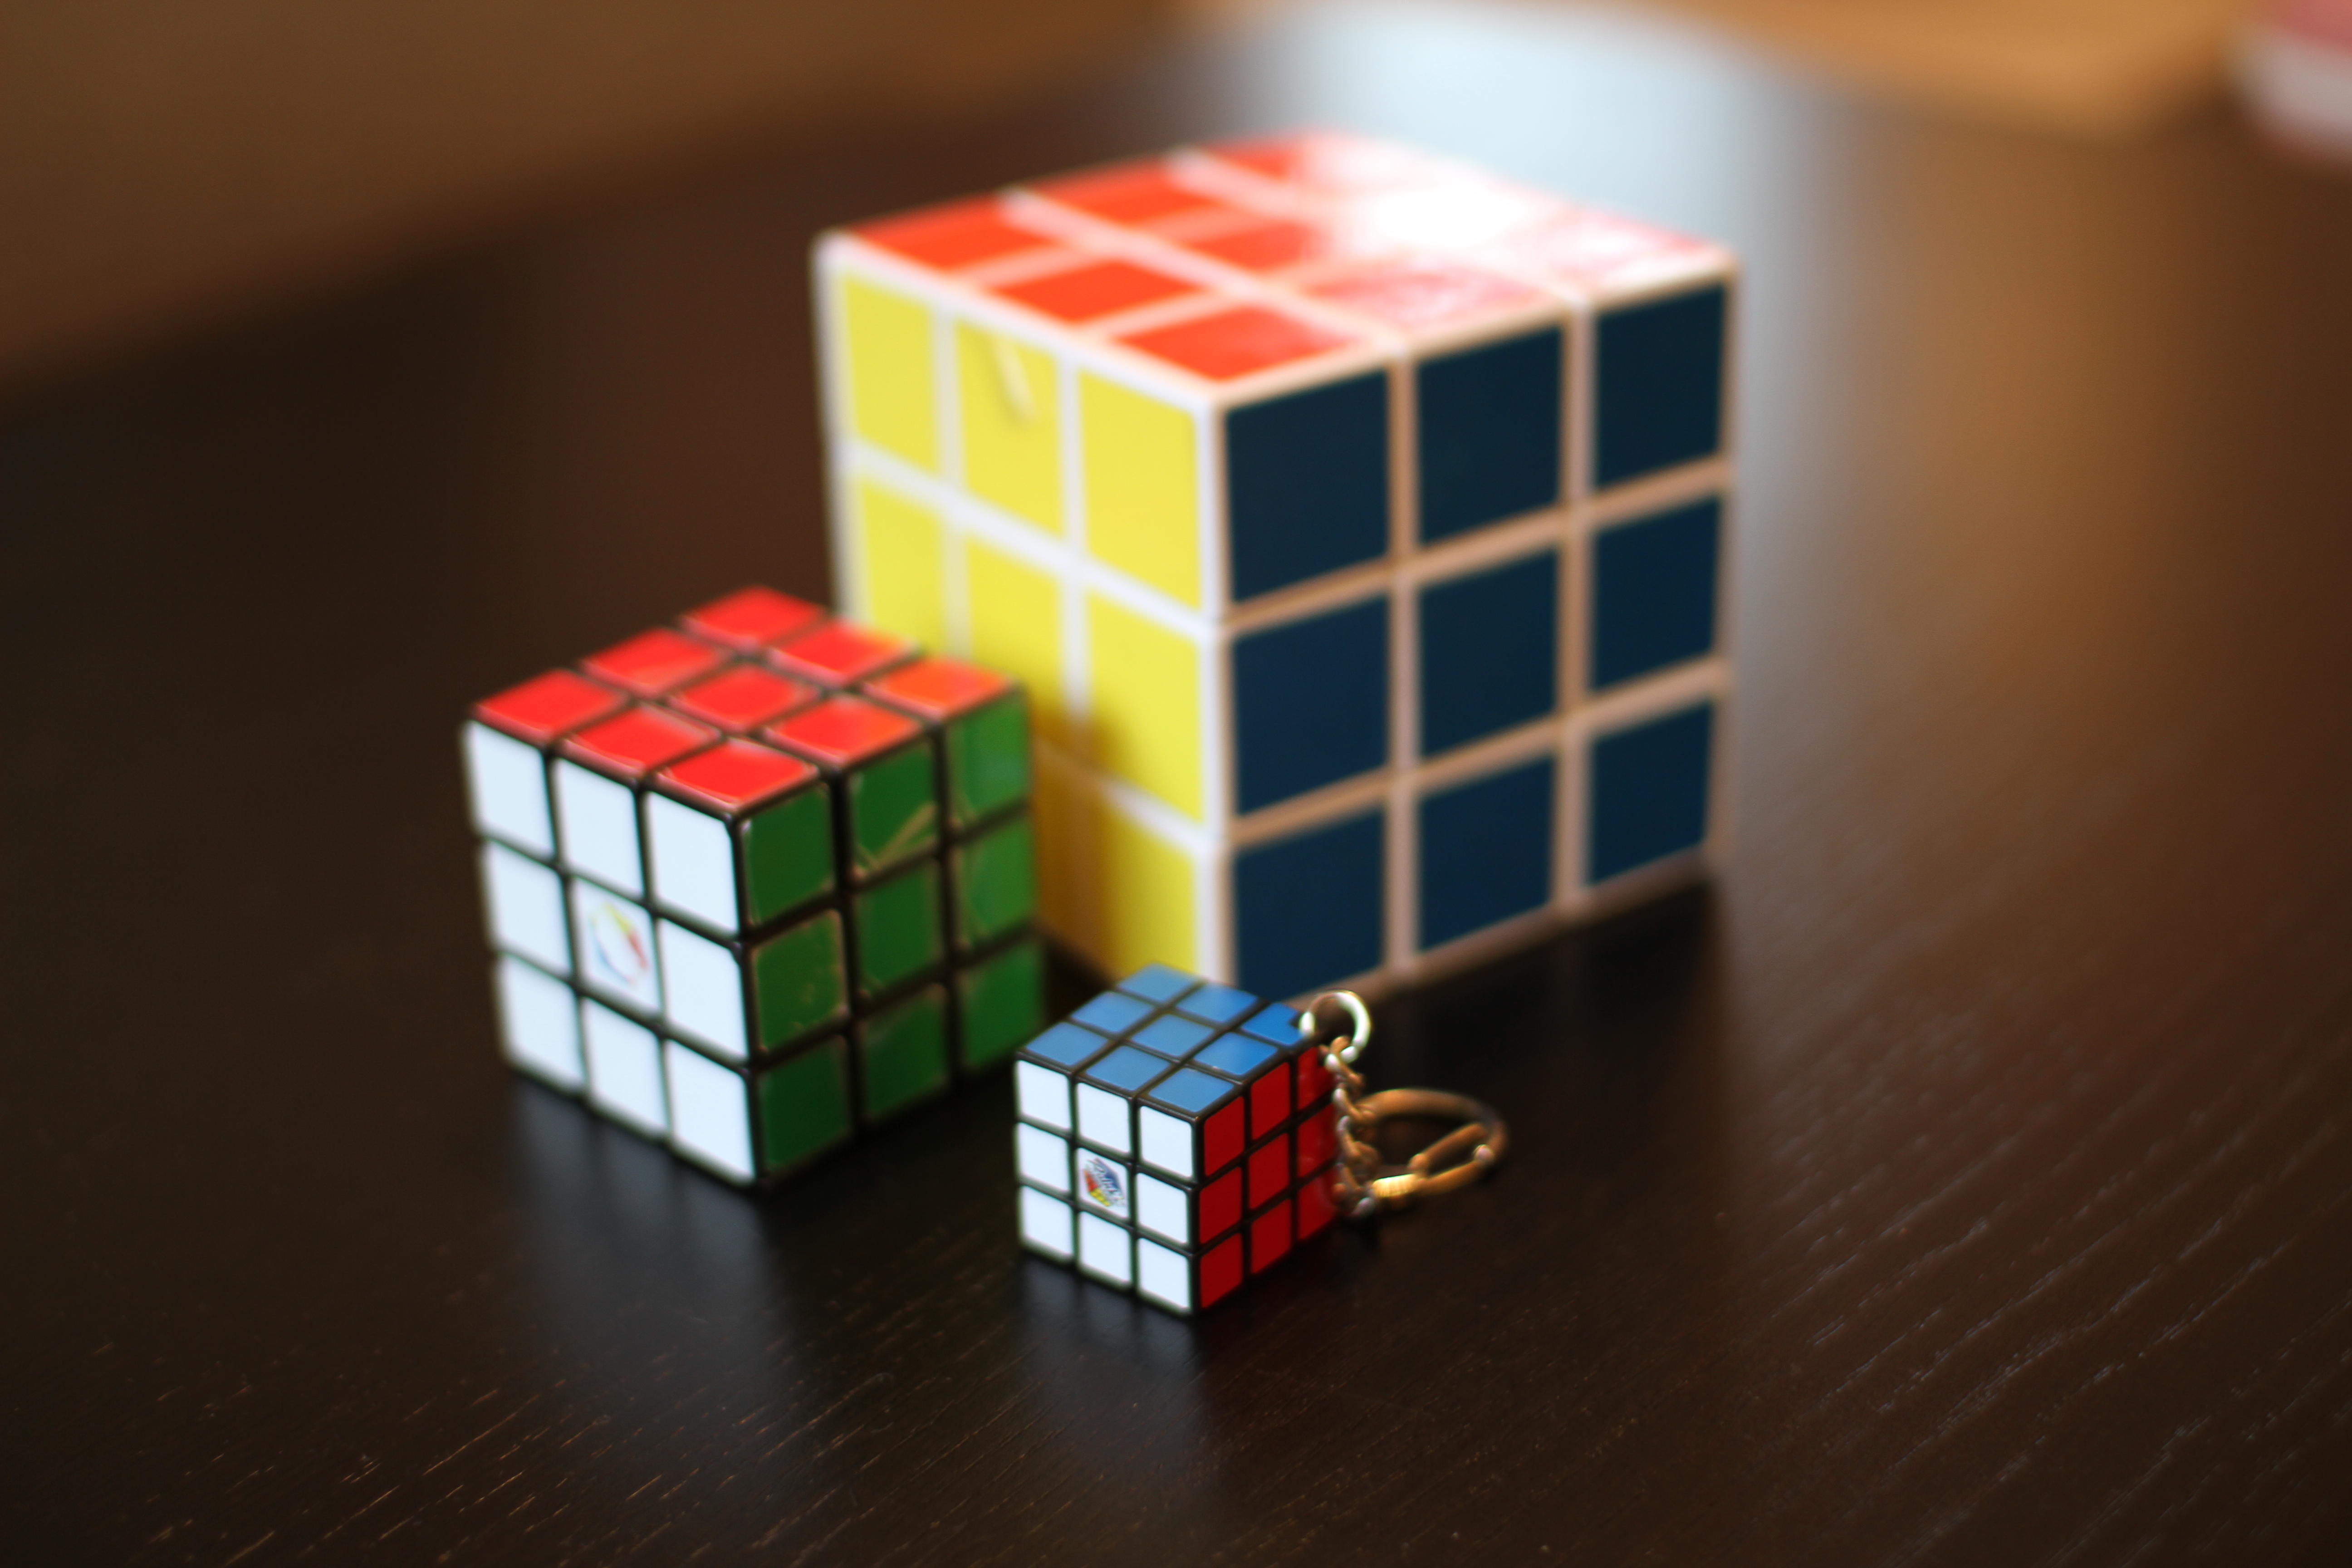 how to play rubik's cube easily